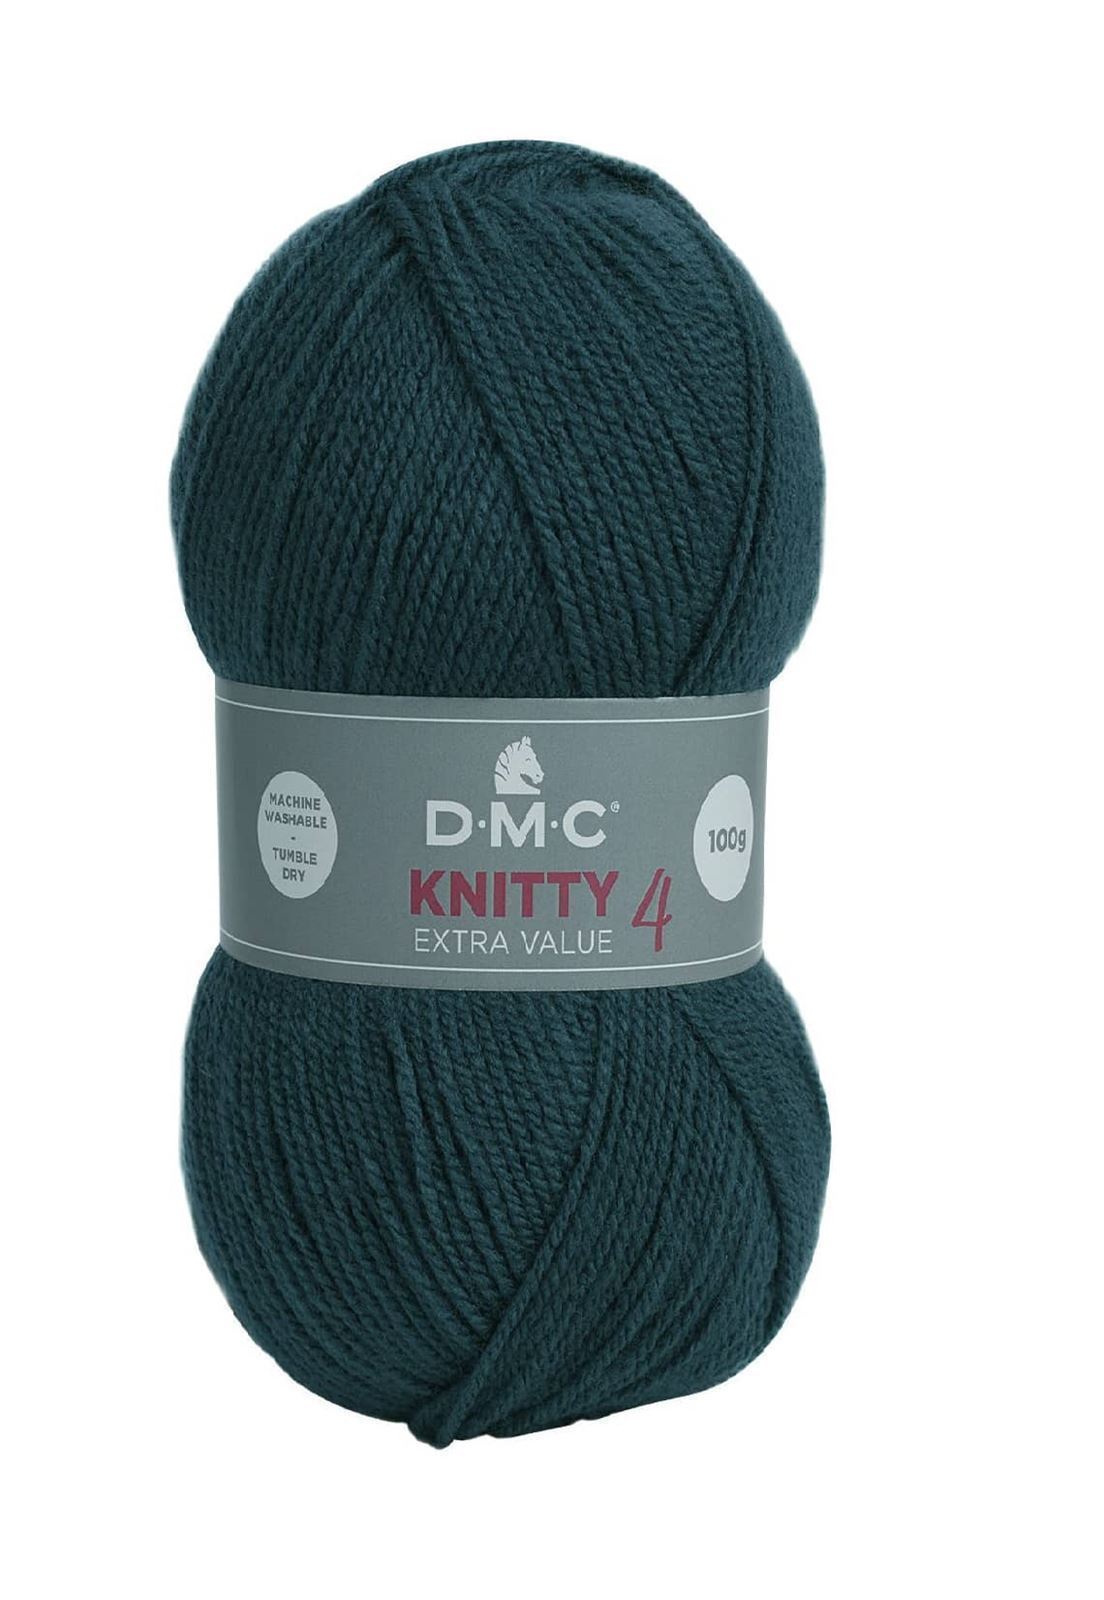 Knitty4 (COLORES OSCUROS) - Imagen 3